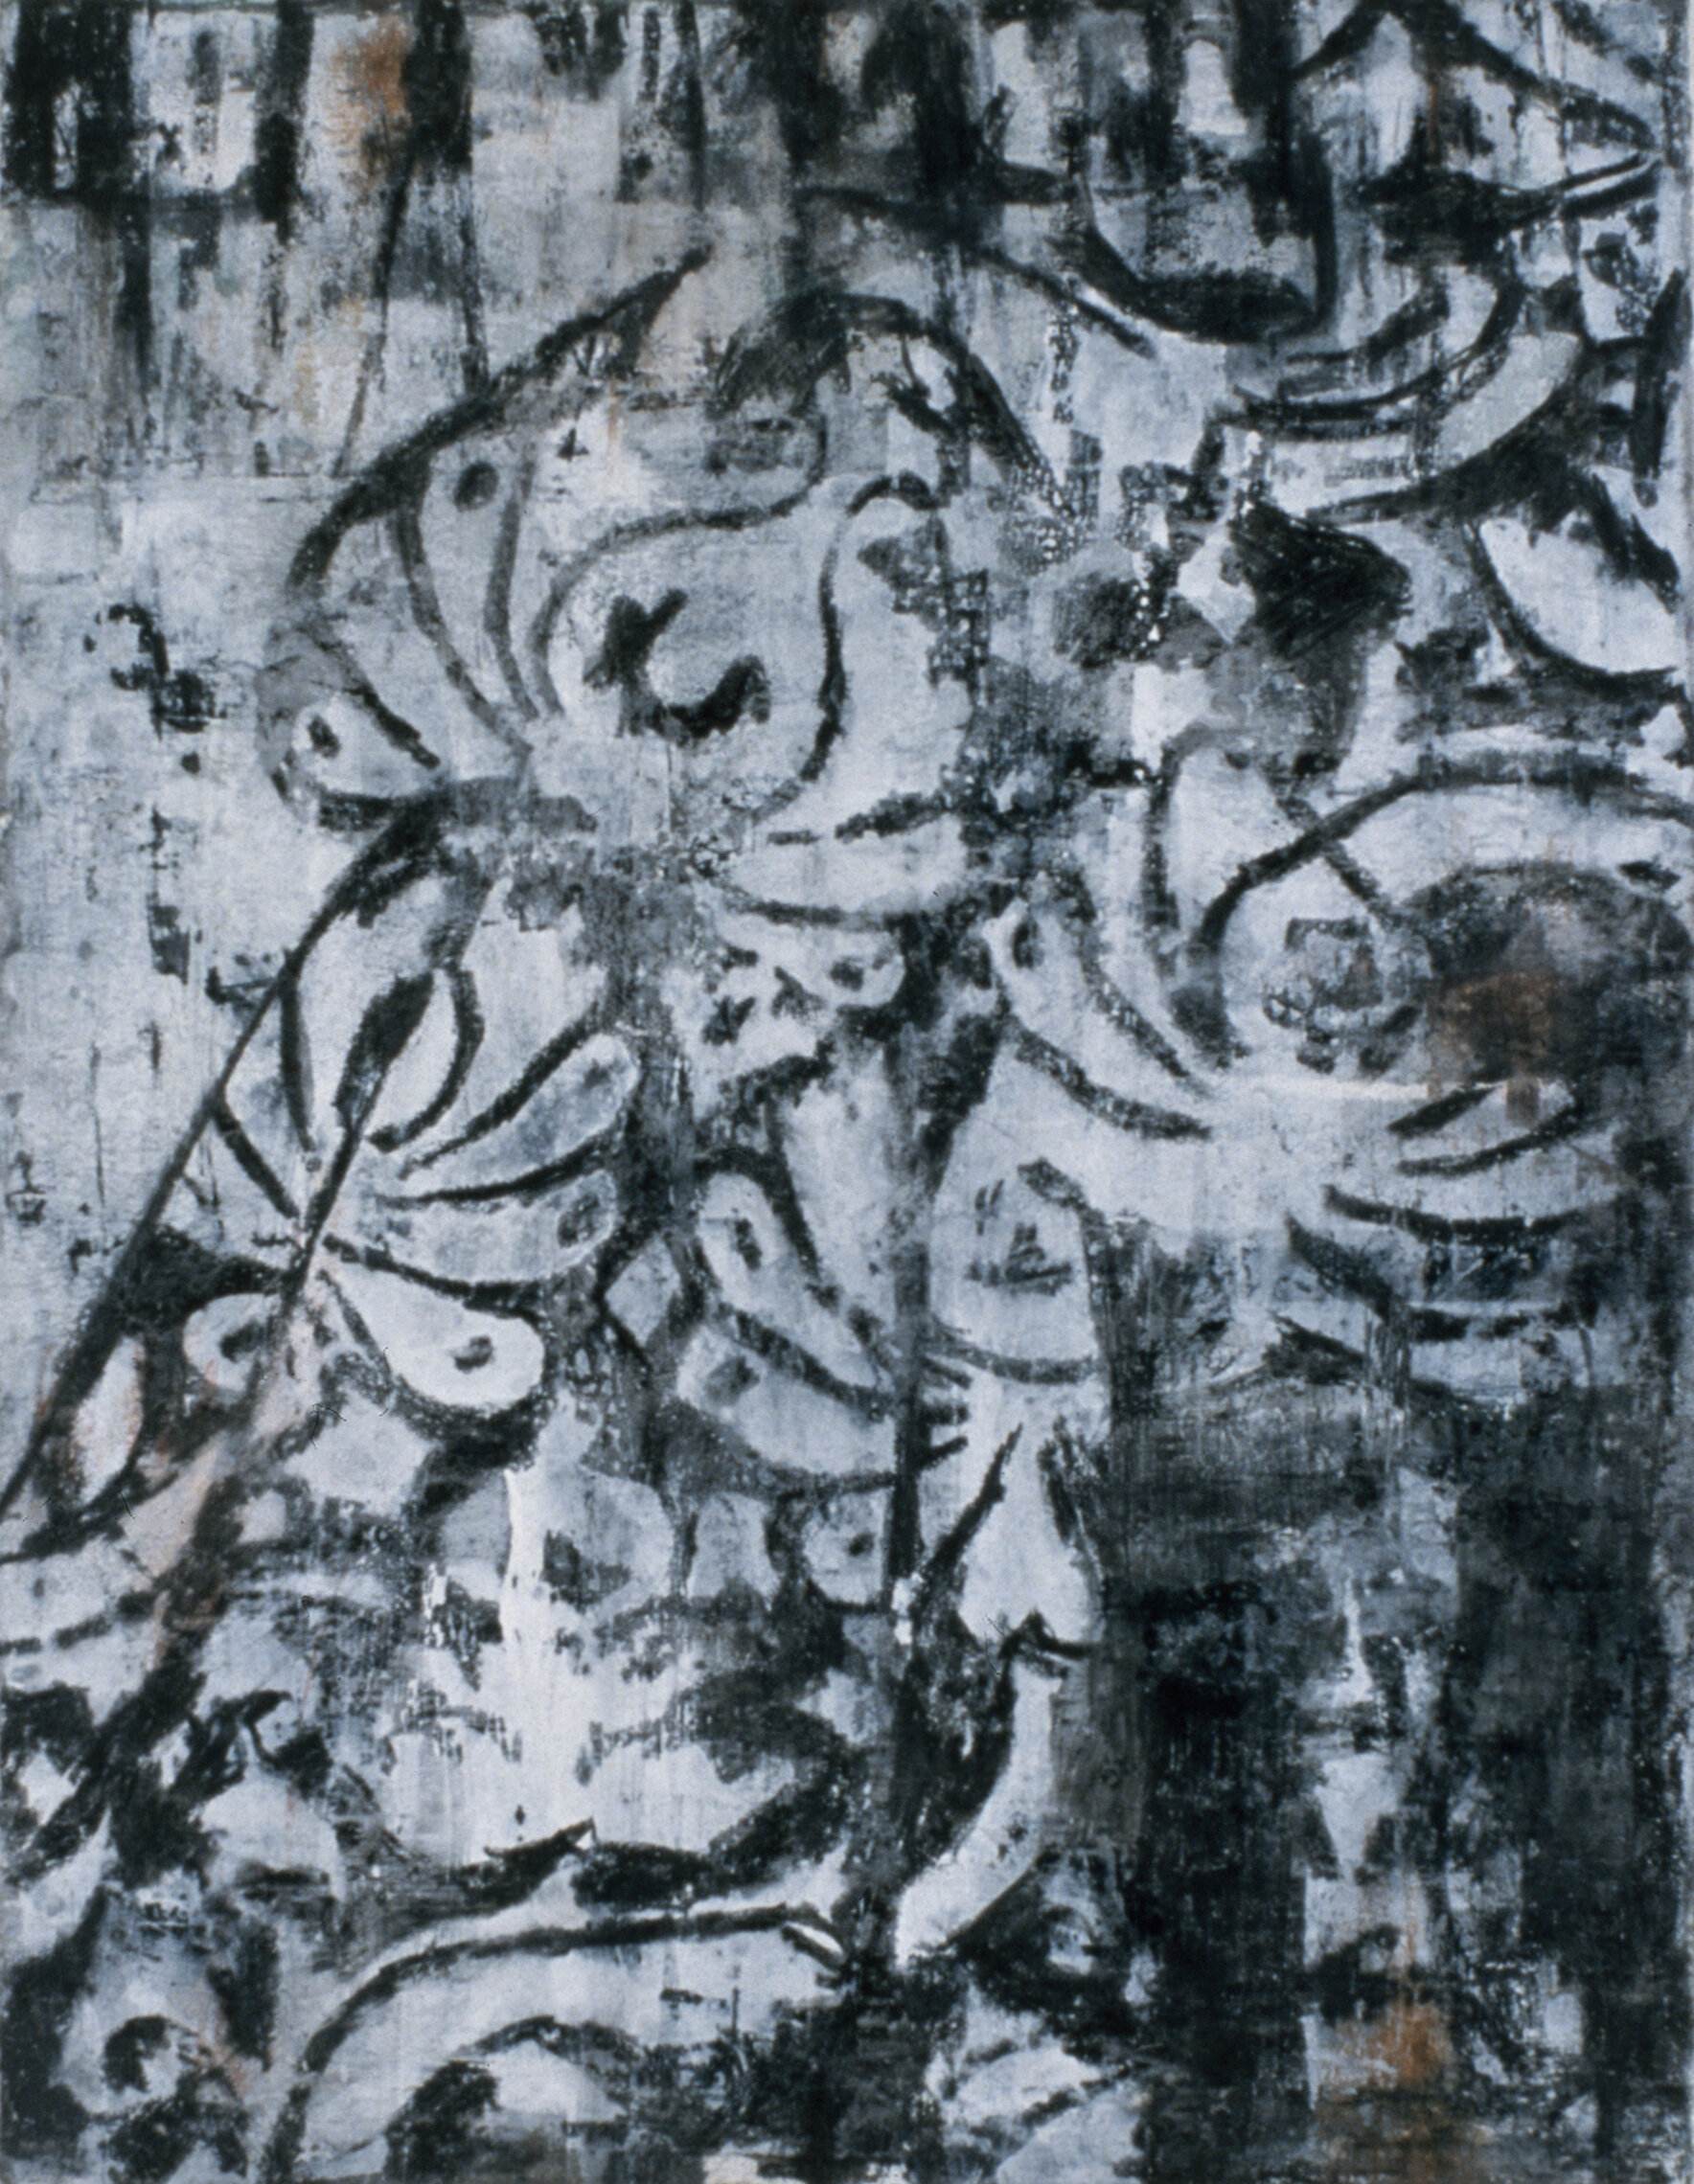   Cloak       1996  Graphite, Gouache, Litho Crayon on Paper          13” x 10”   